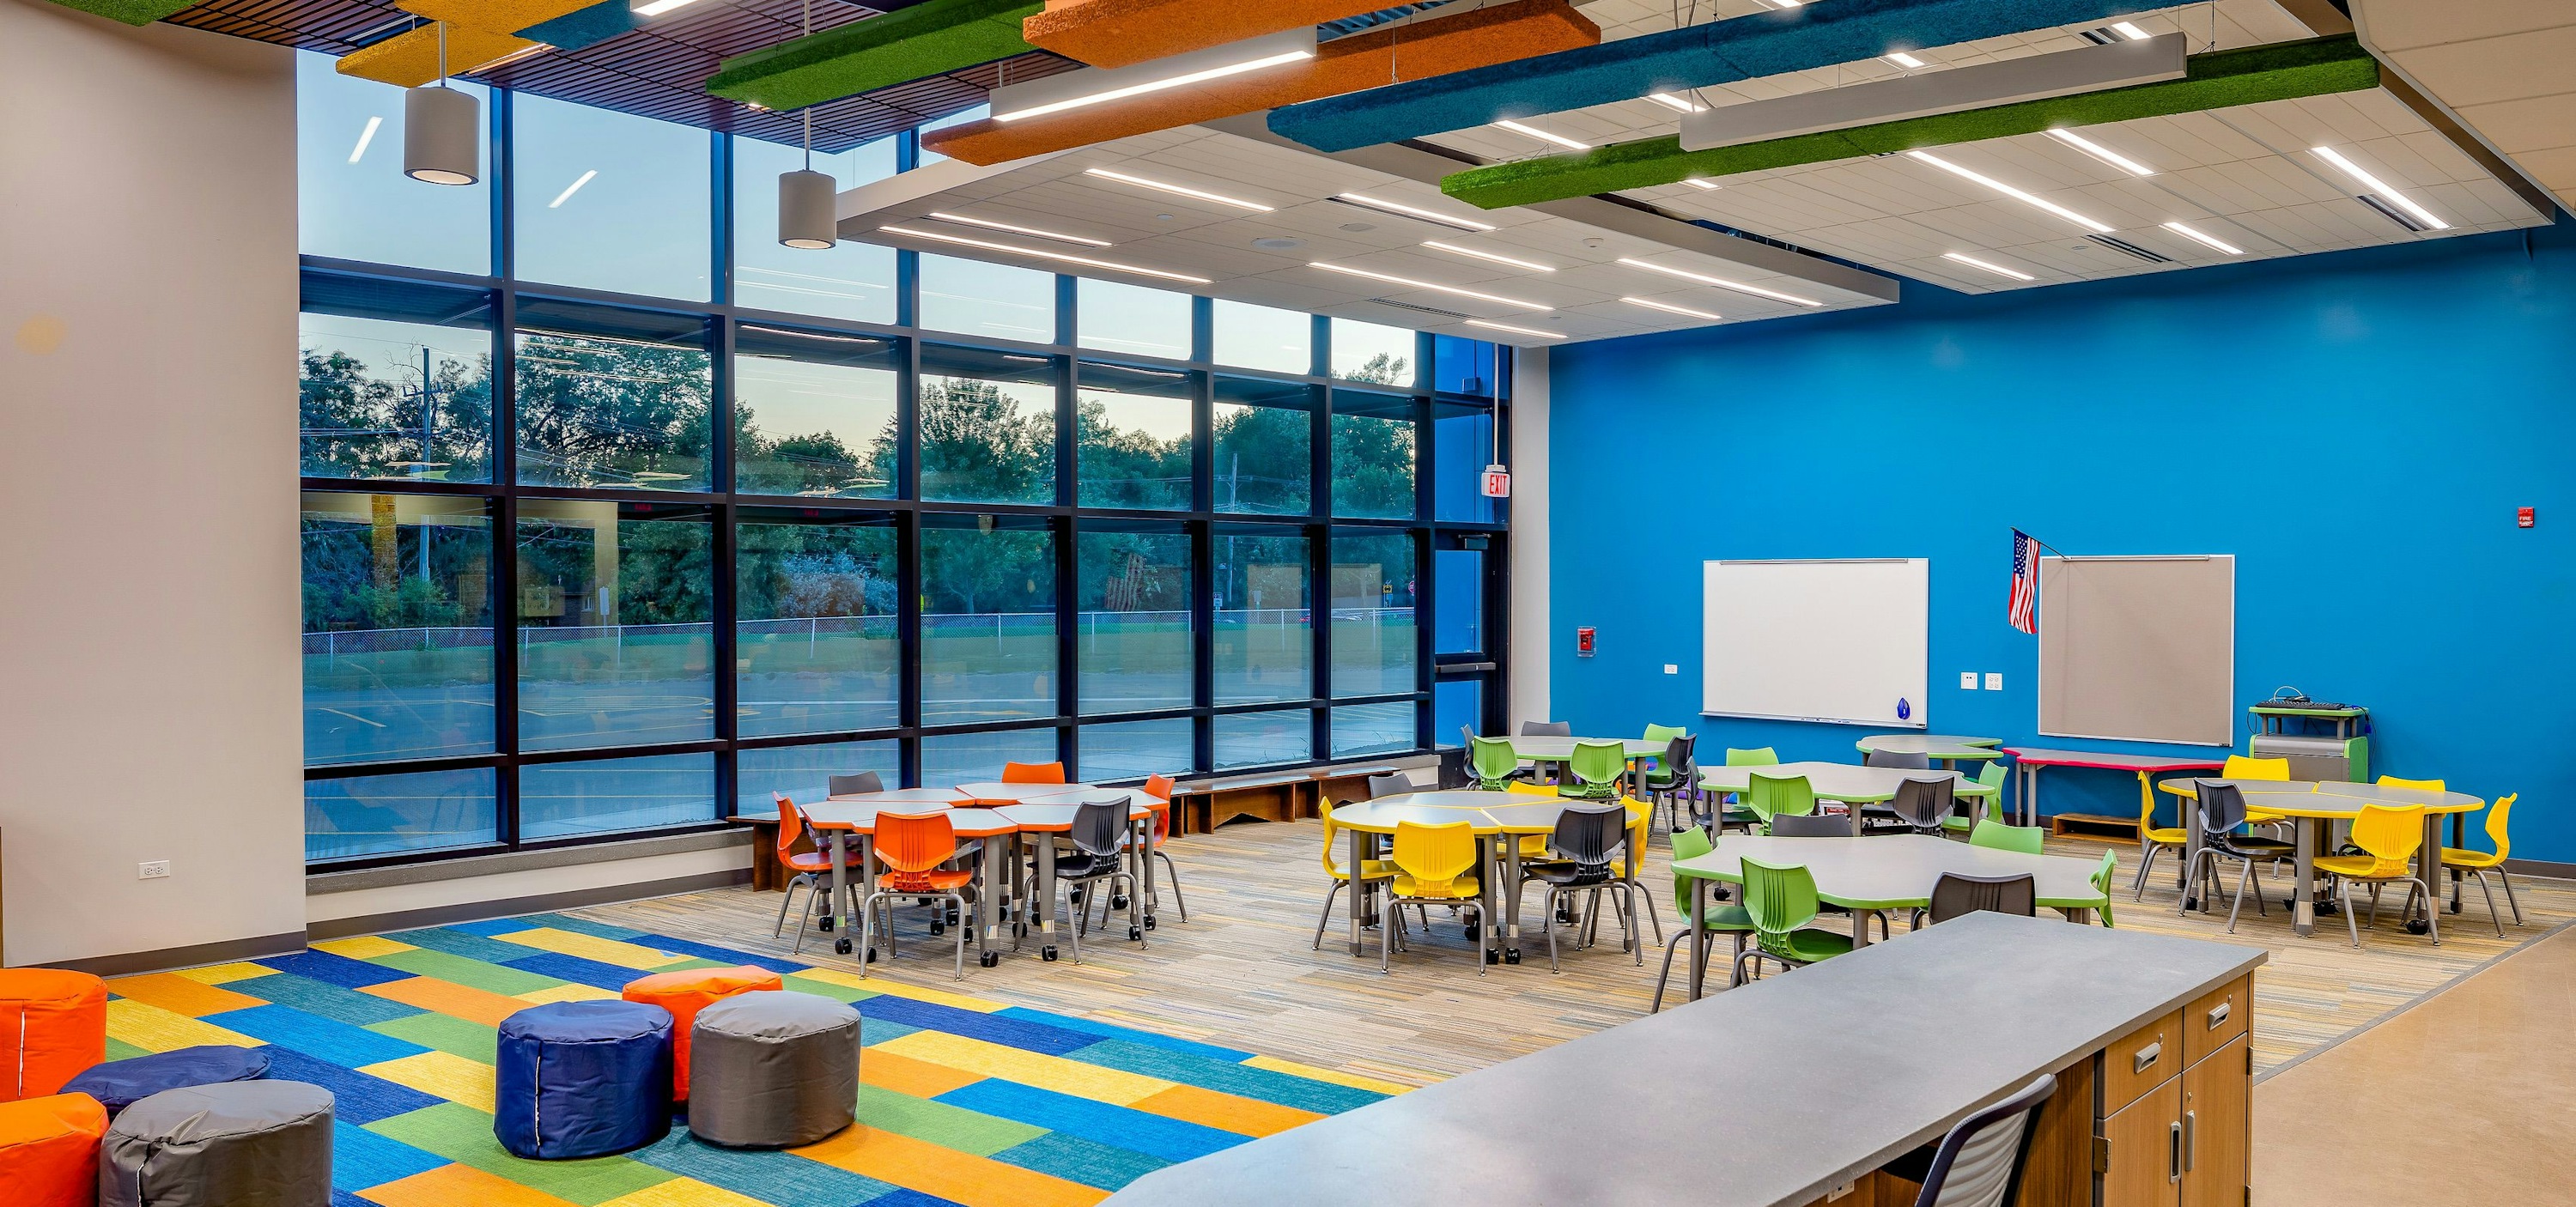 Elementary Classroom Design